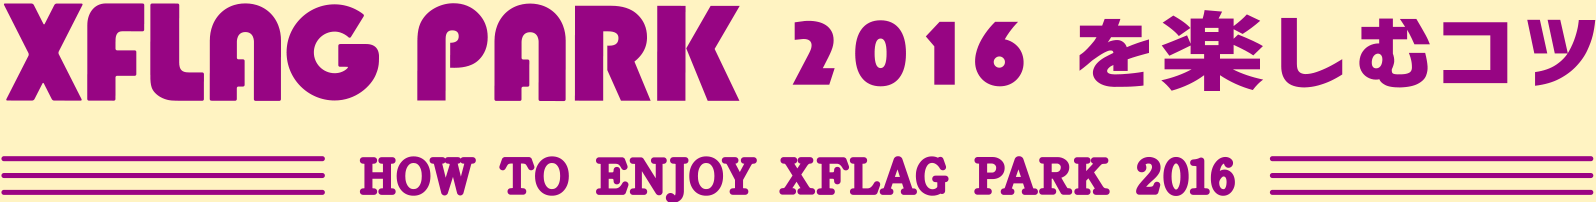 XFLAG PARK 2016を楽しむコツ HOW TO ENJOY XFLAG PARK 2016